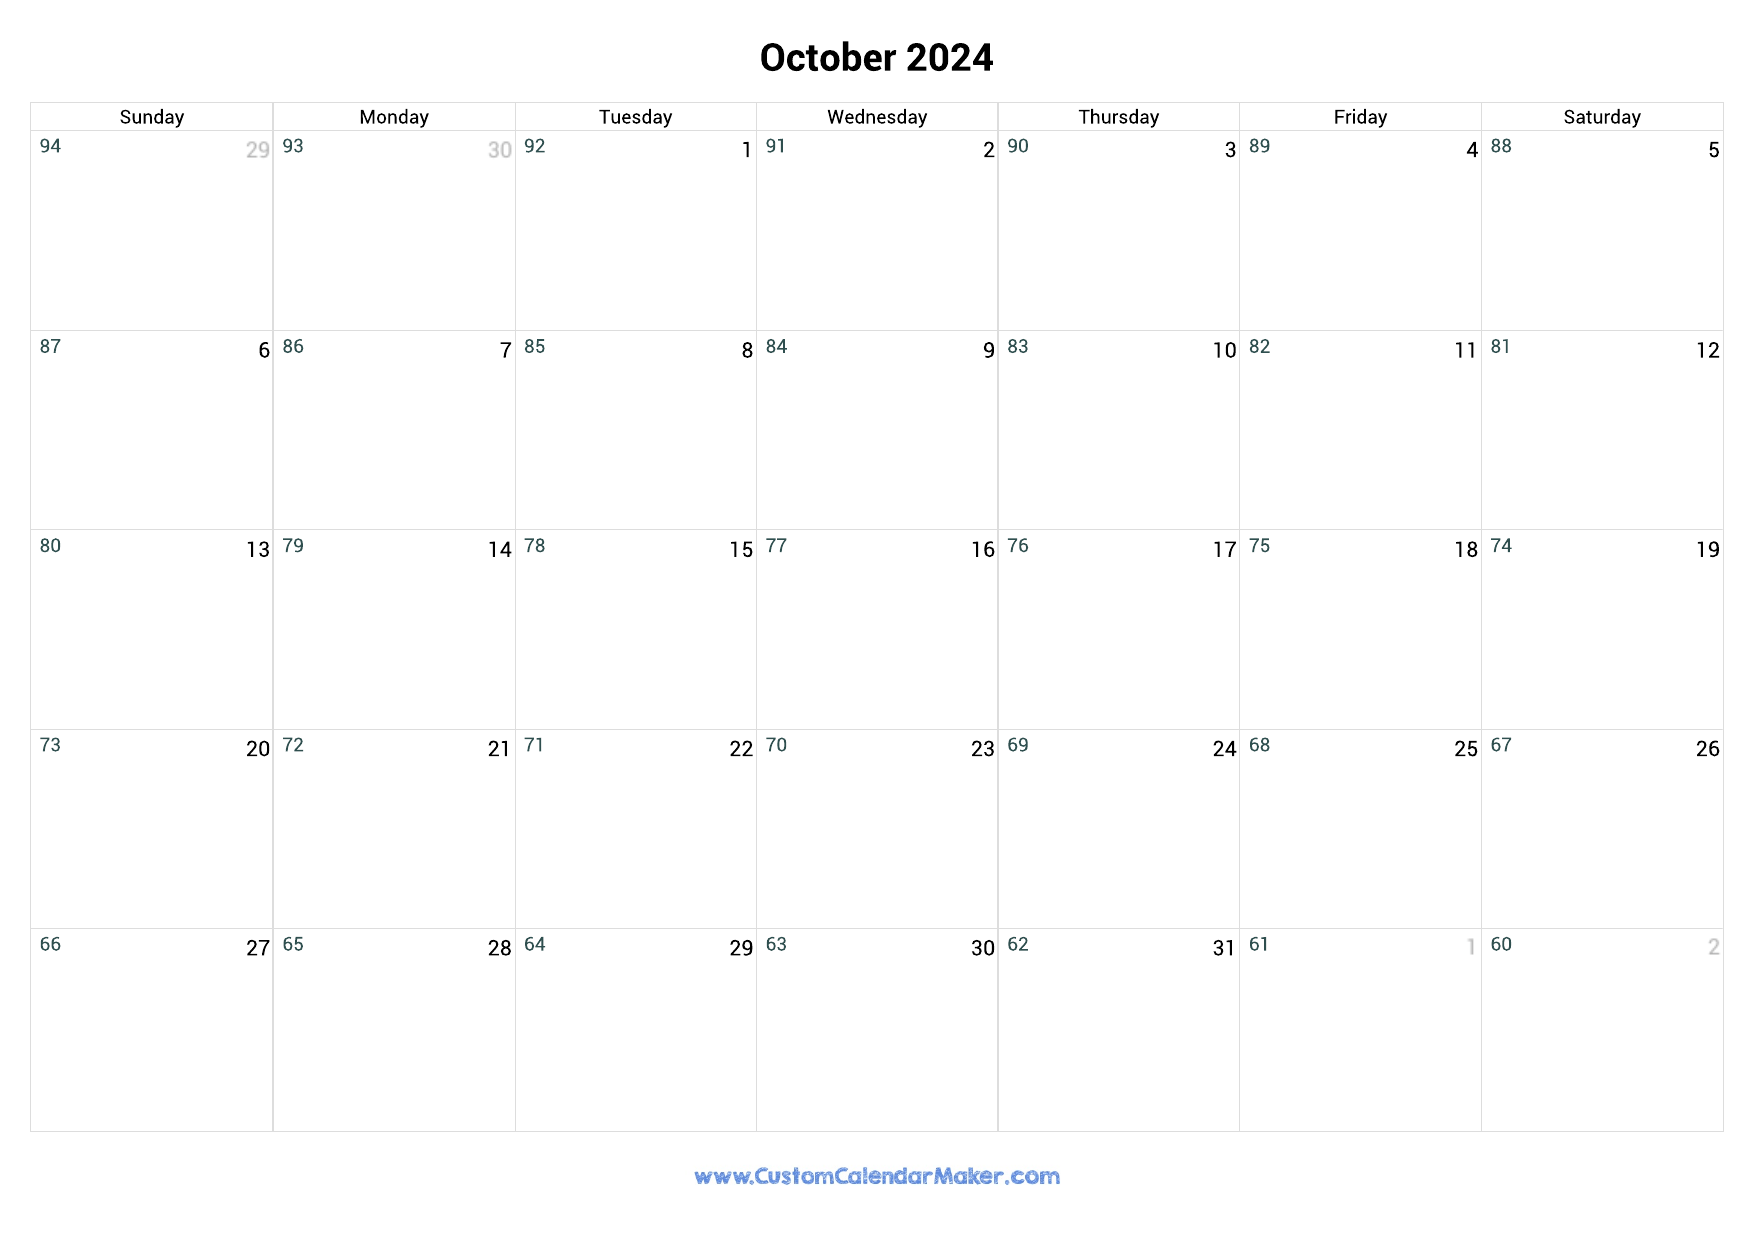 October 2024 Remaining Days Calendar